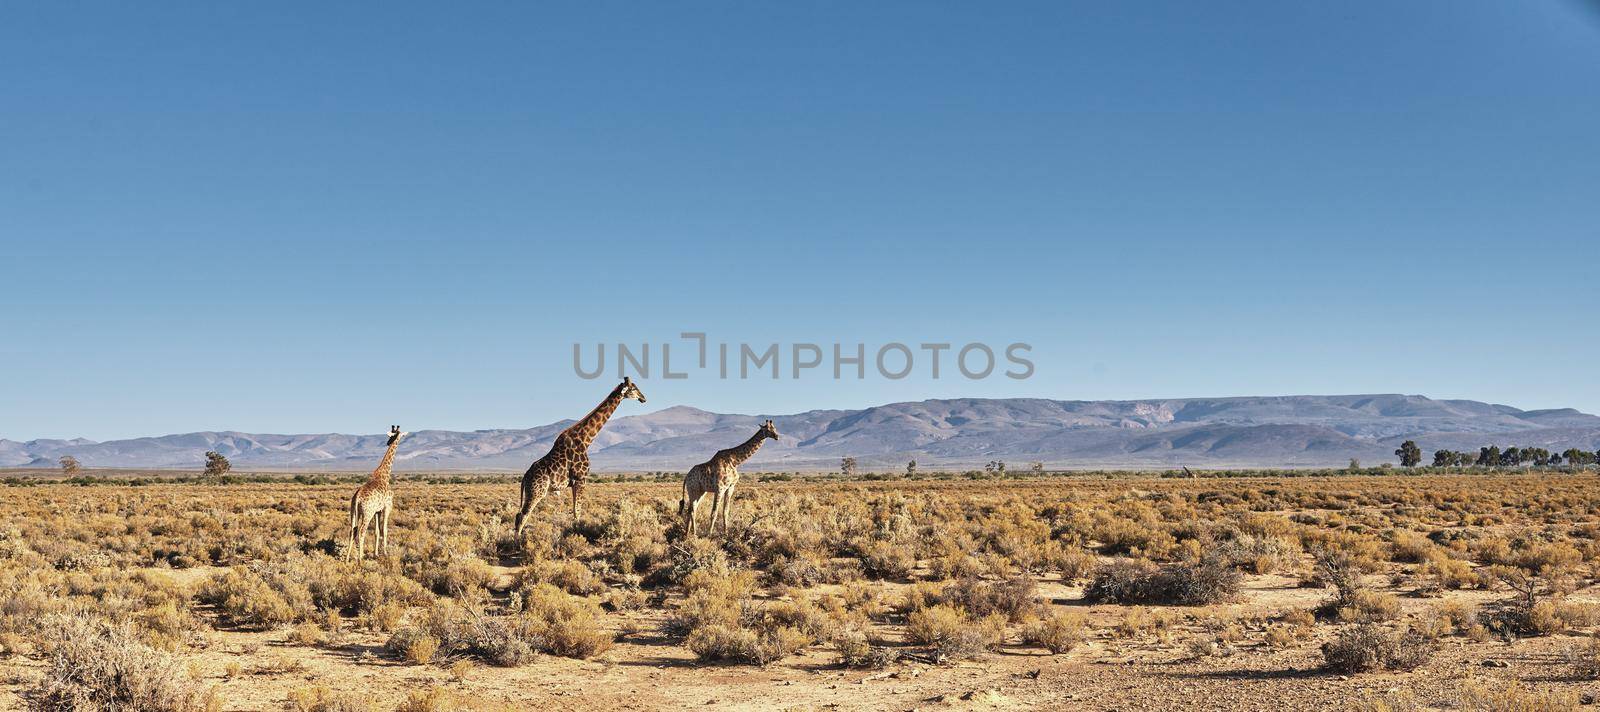 Beautiful giraffe. A photo of a beautiful giraffe on the savanna late afternoon in South Africa